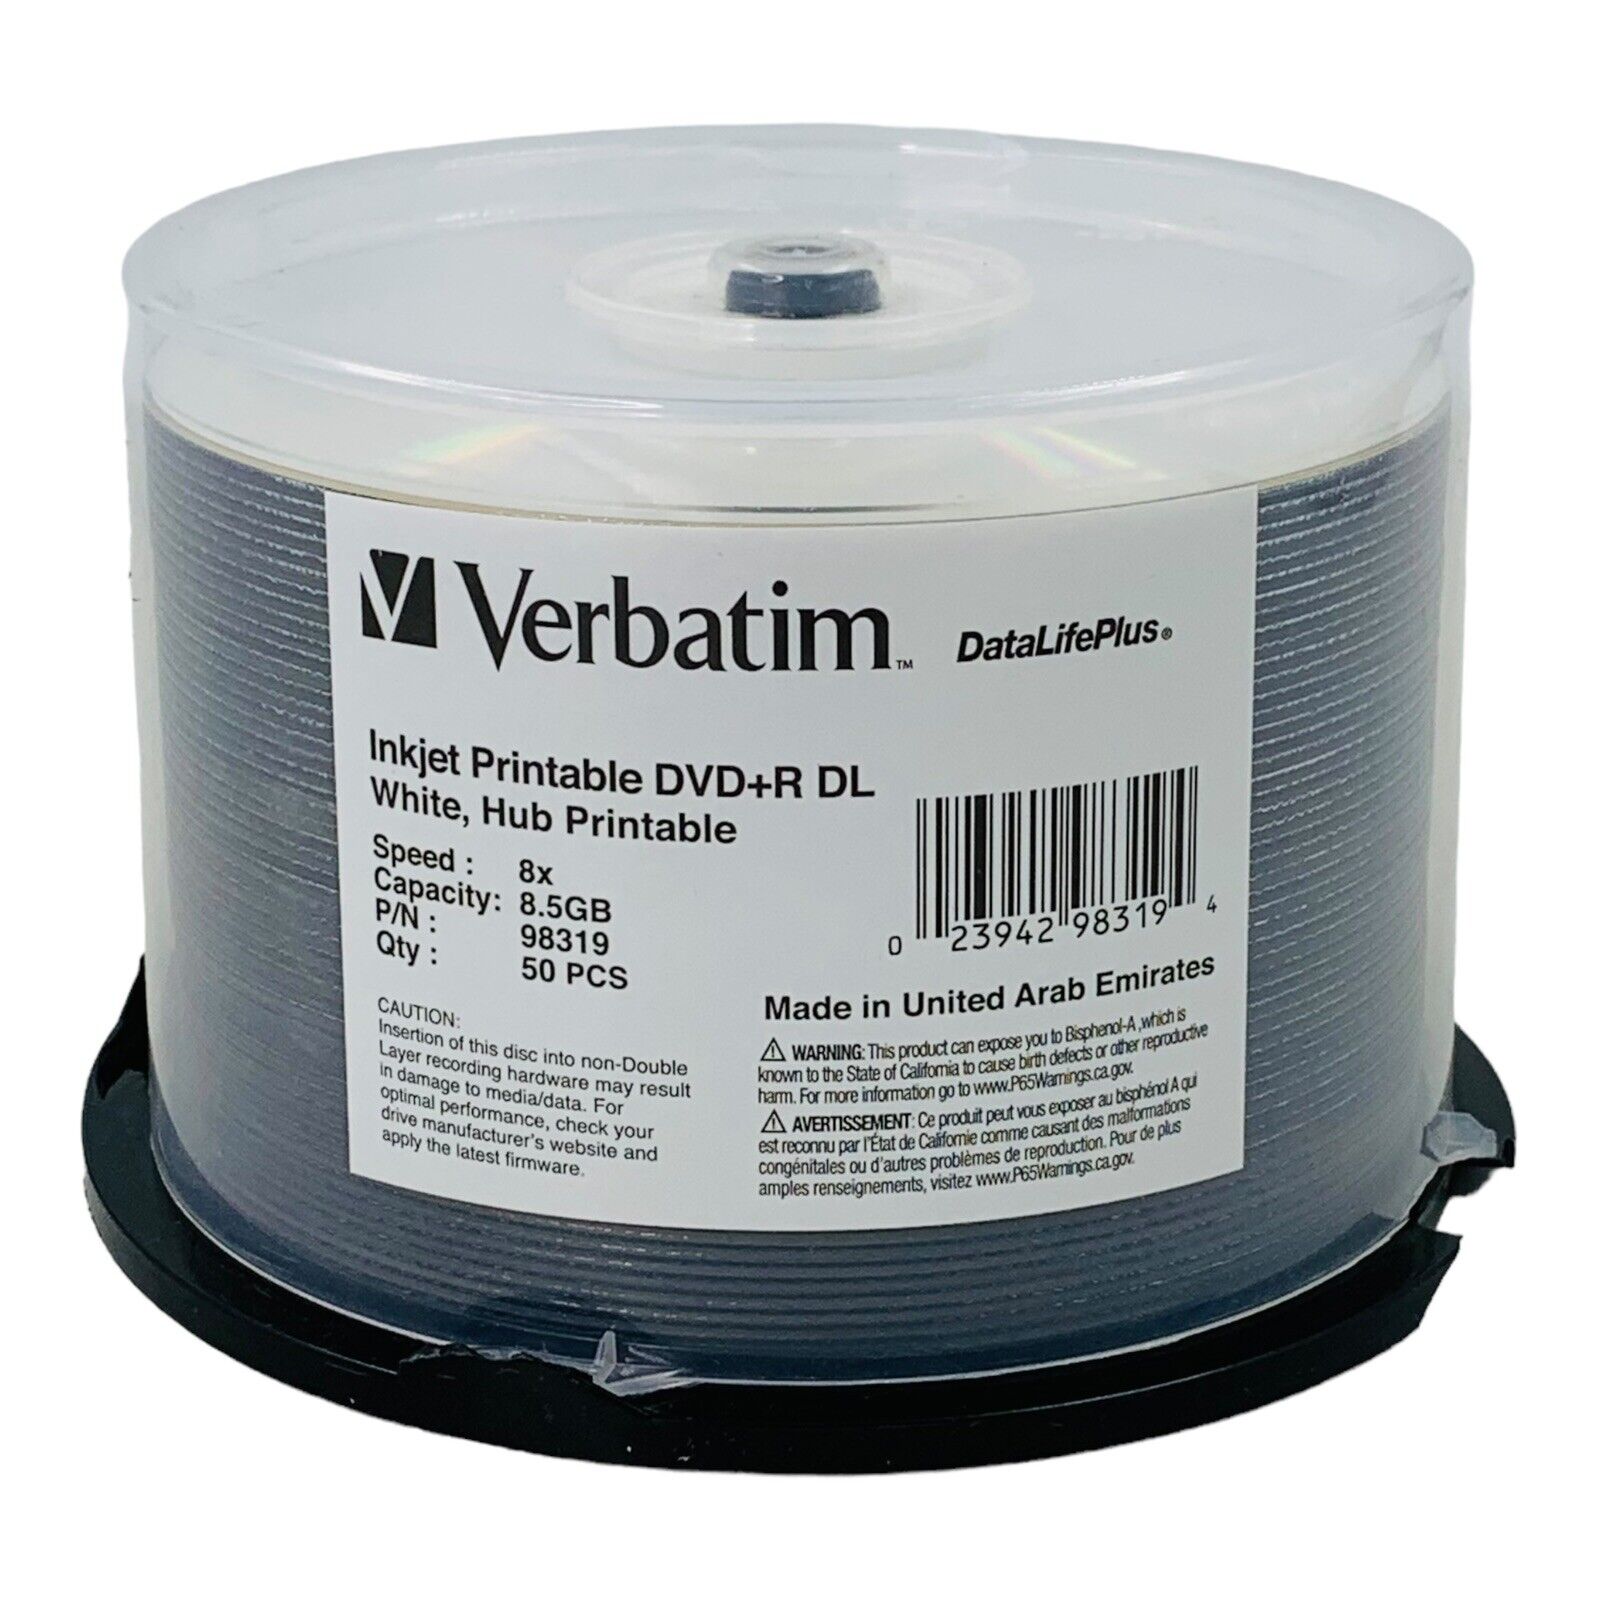 50 Disks Verbatim DVD+R DL 8.5GB 8X White InkJet Printable Hub Printable *Read*